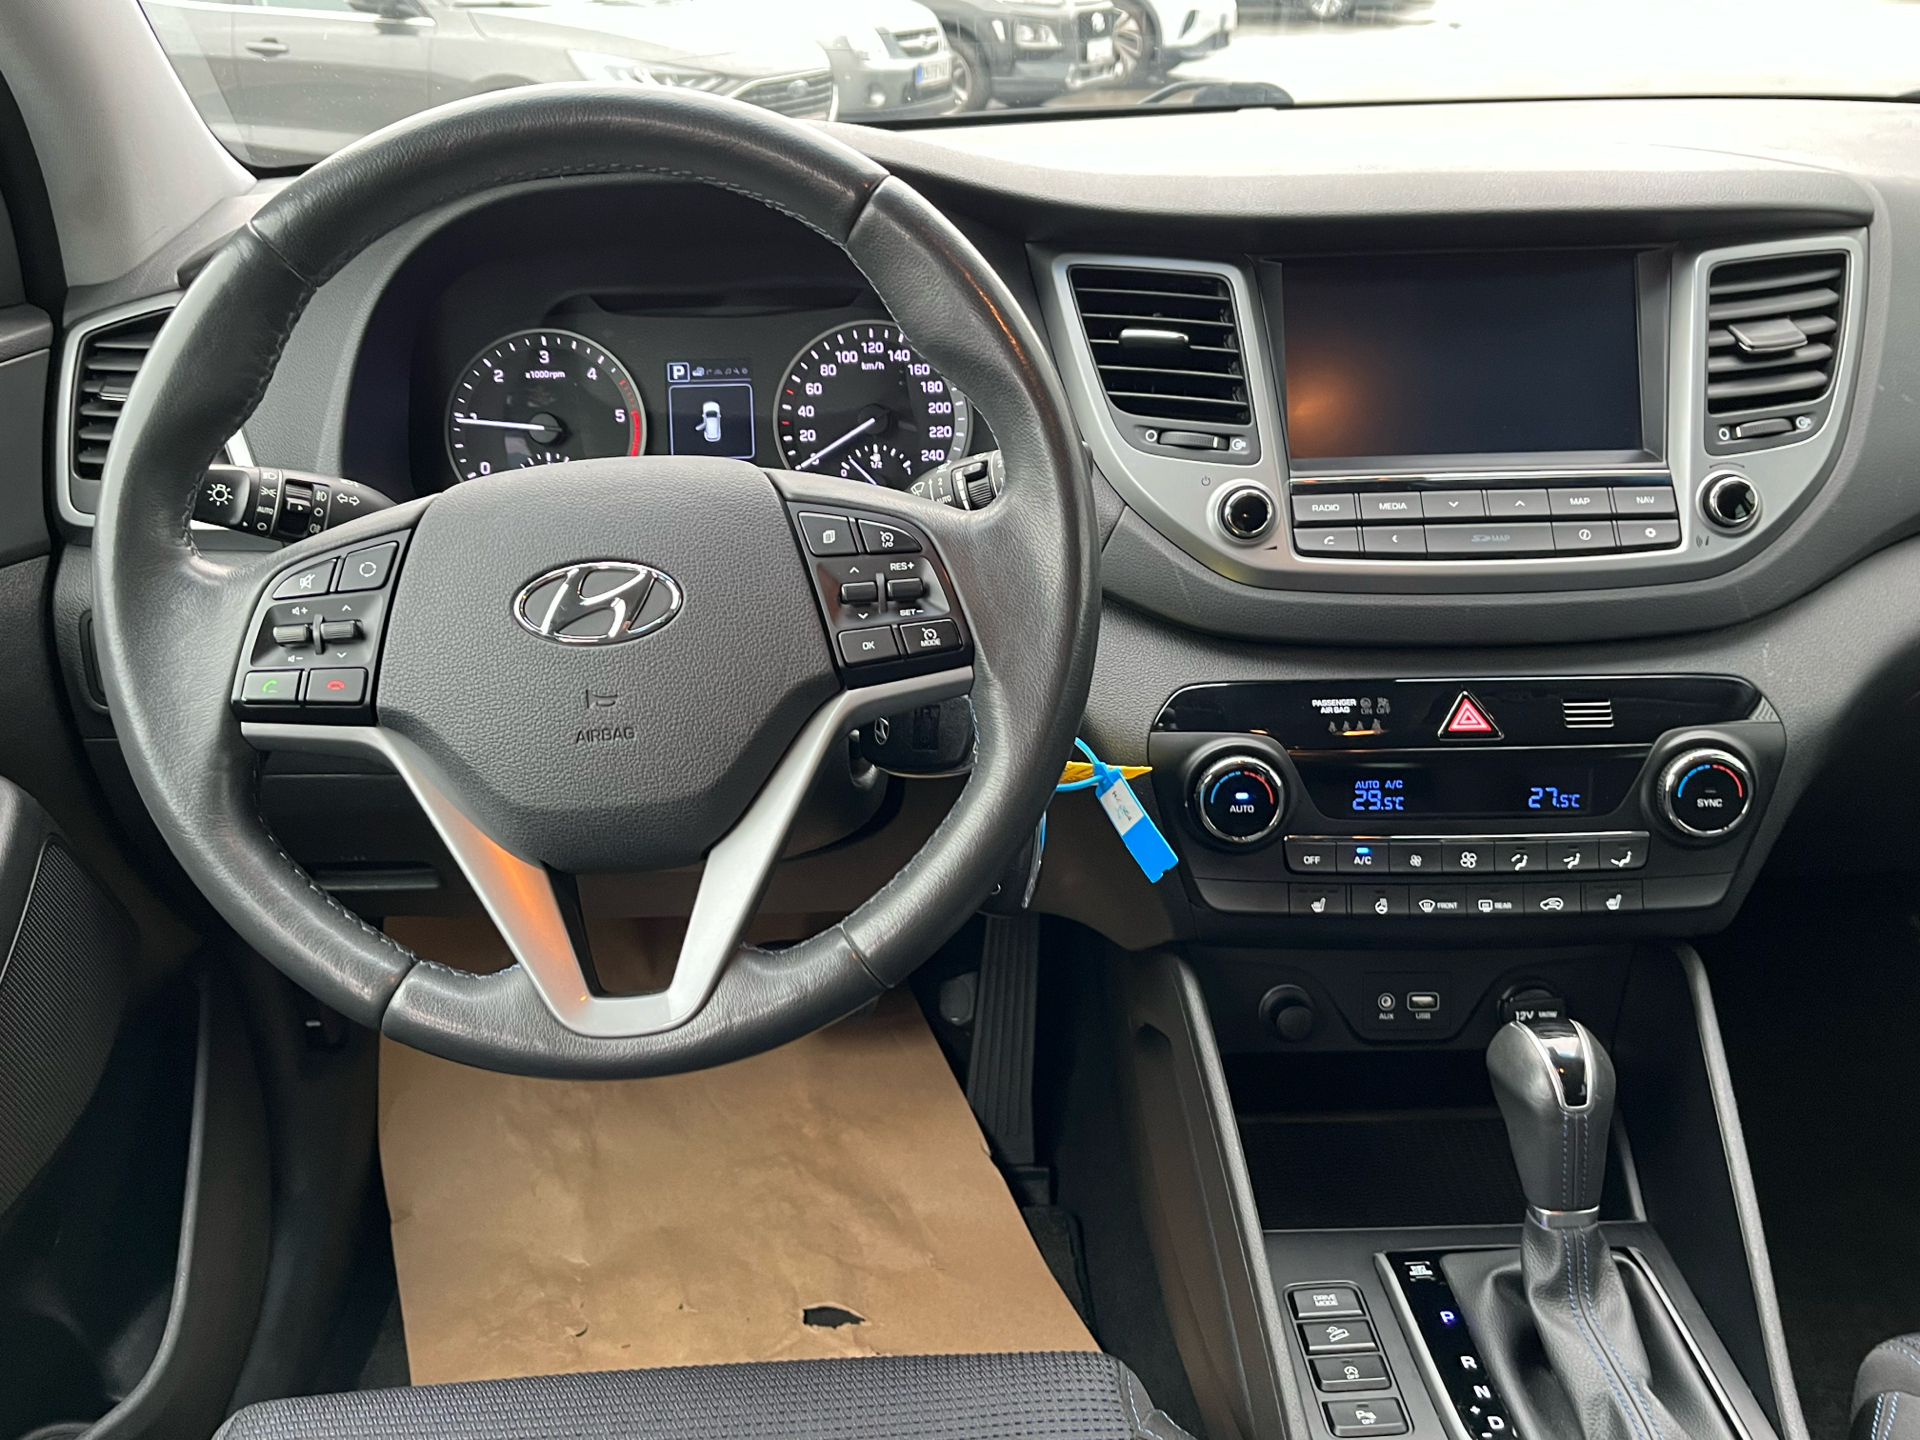 Billede af Hyundai Tucson 1,7 CRDi ISG Trend DCT 141HK 5d 7g Aut.